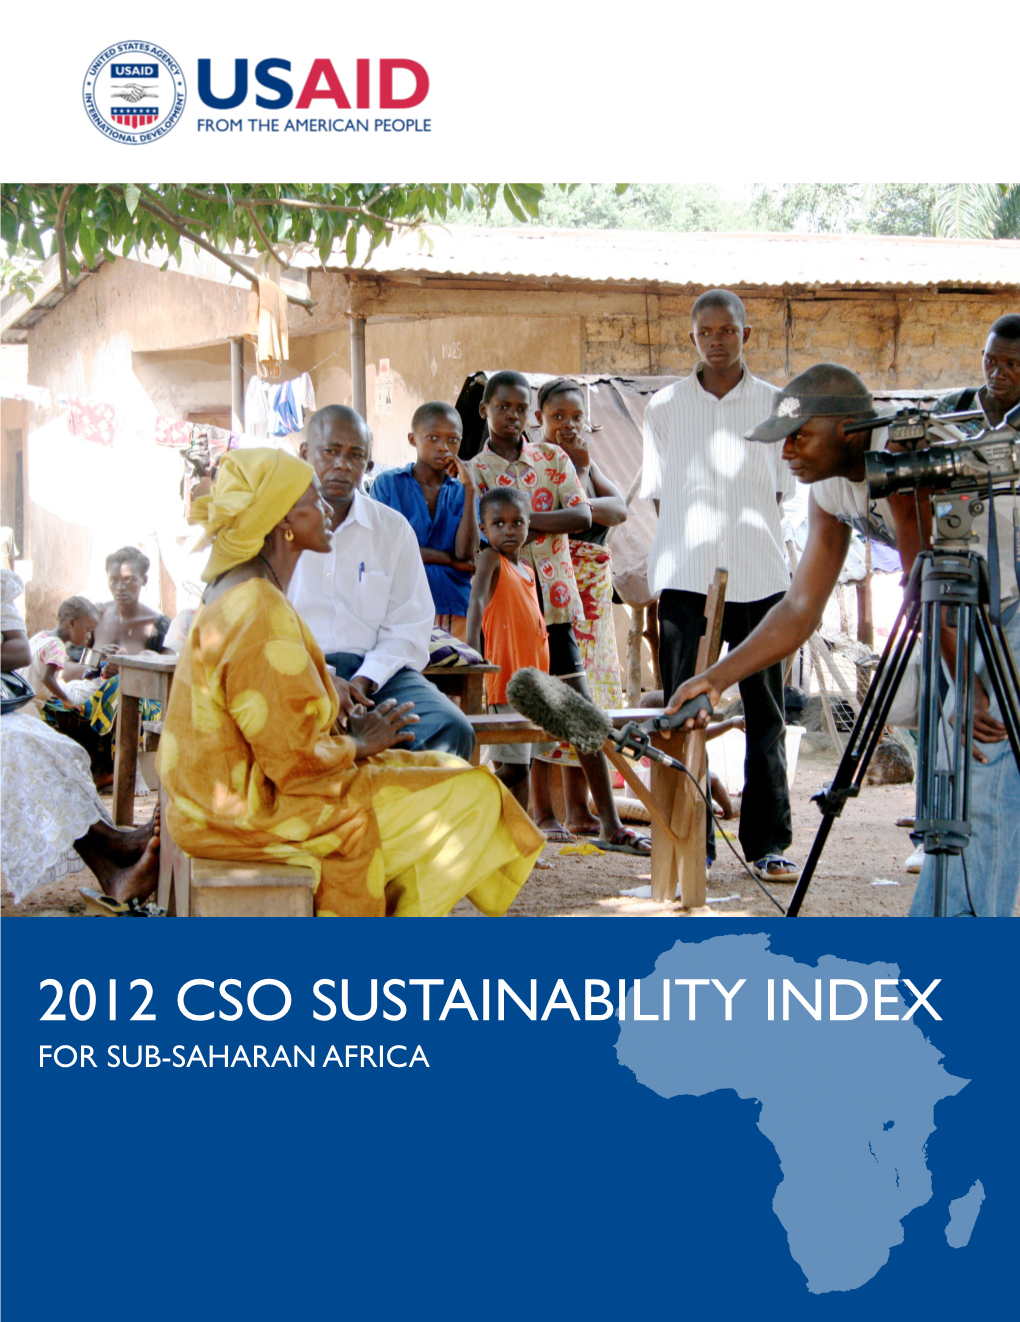 The 2012 CSO Sustainability Index for Sub-Saharan Africa